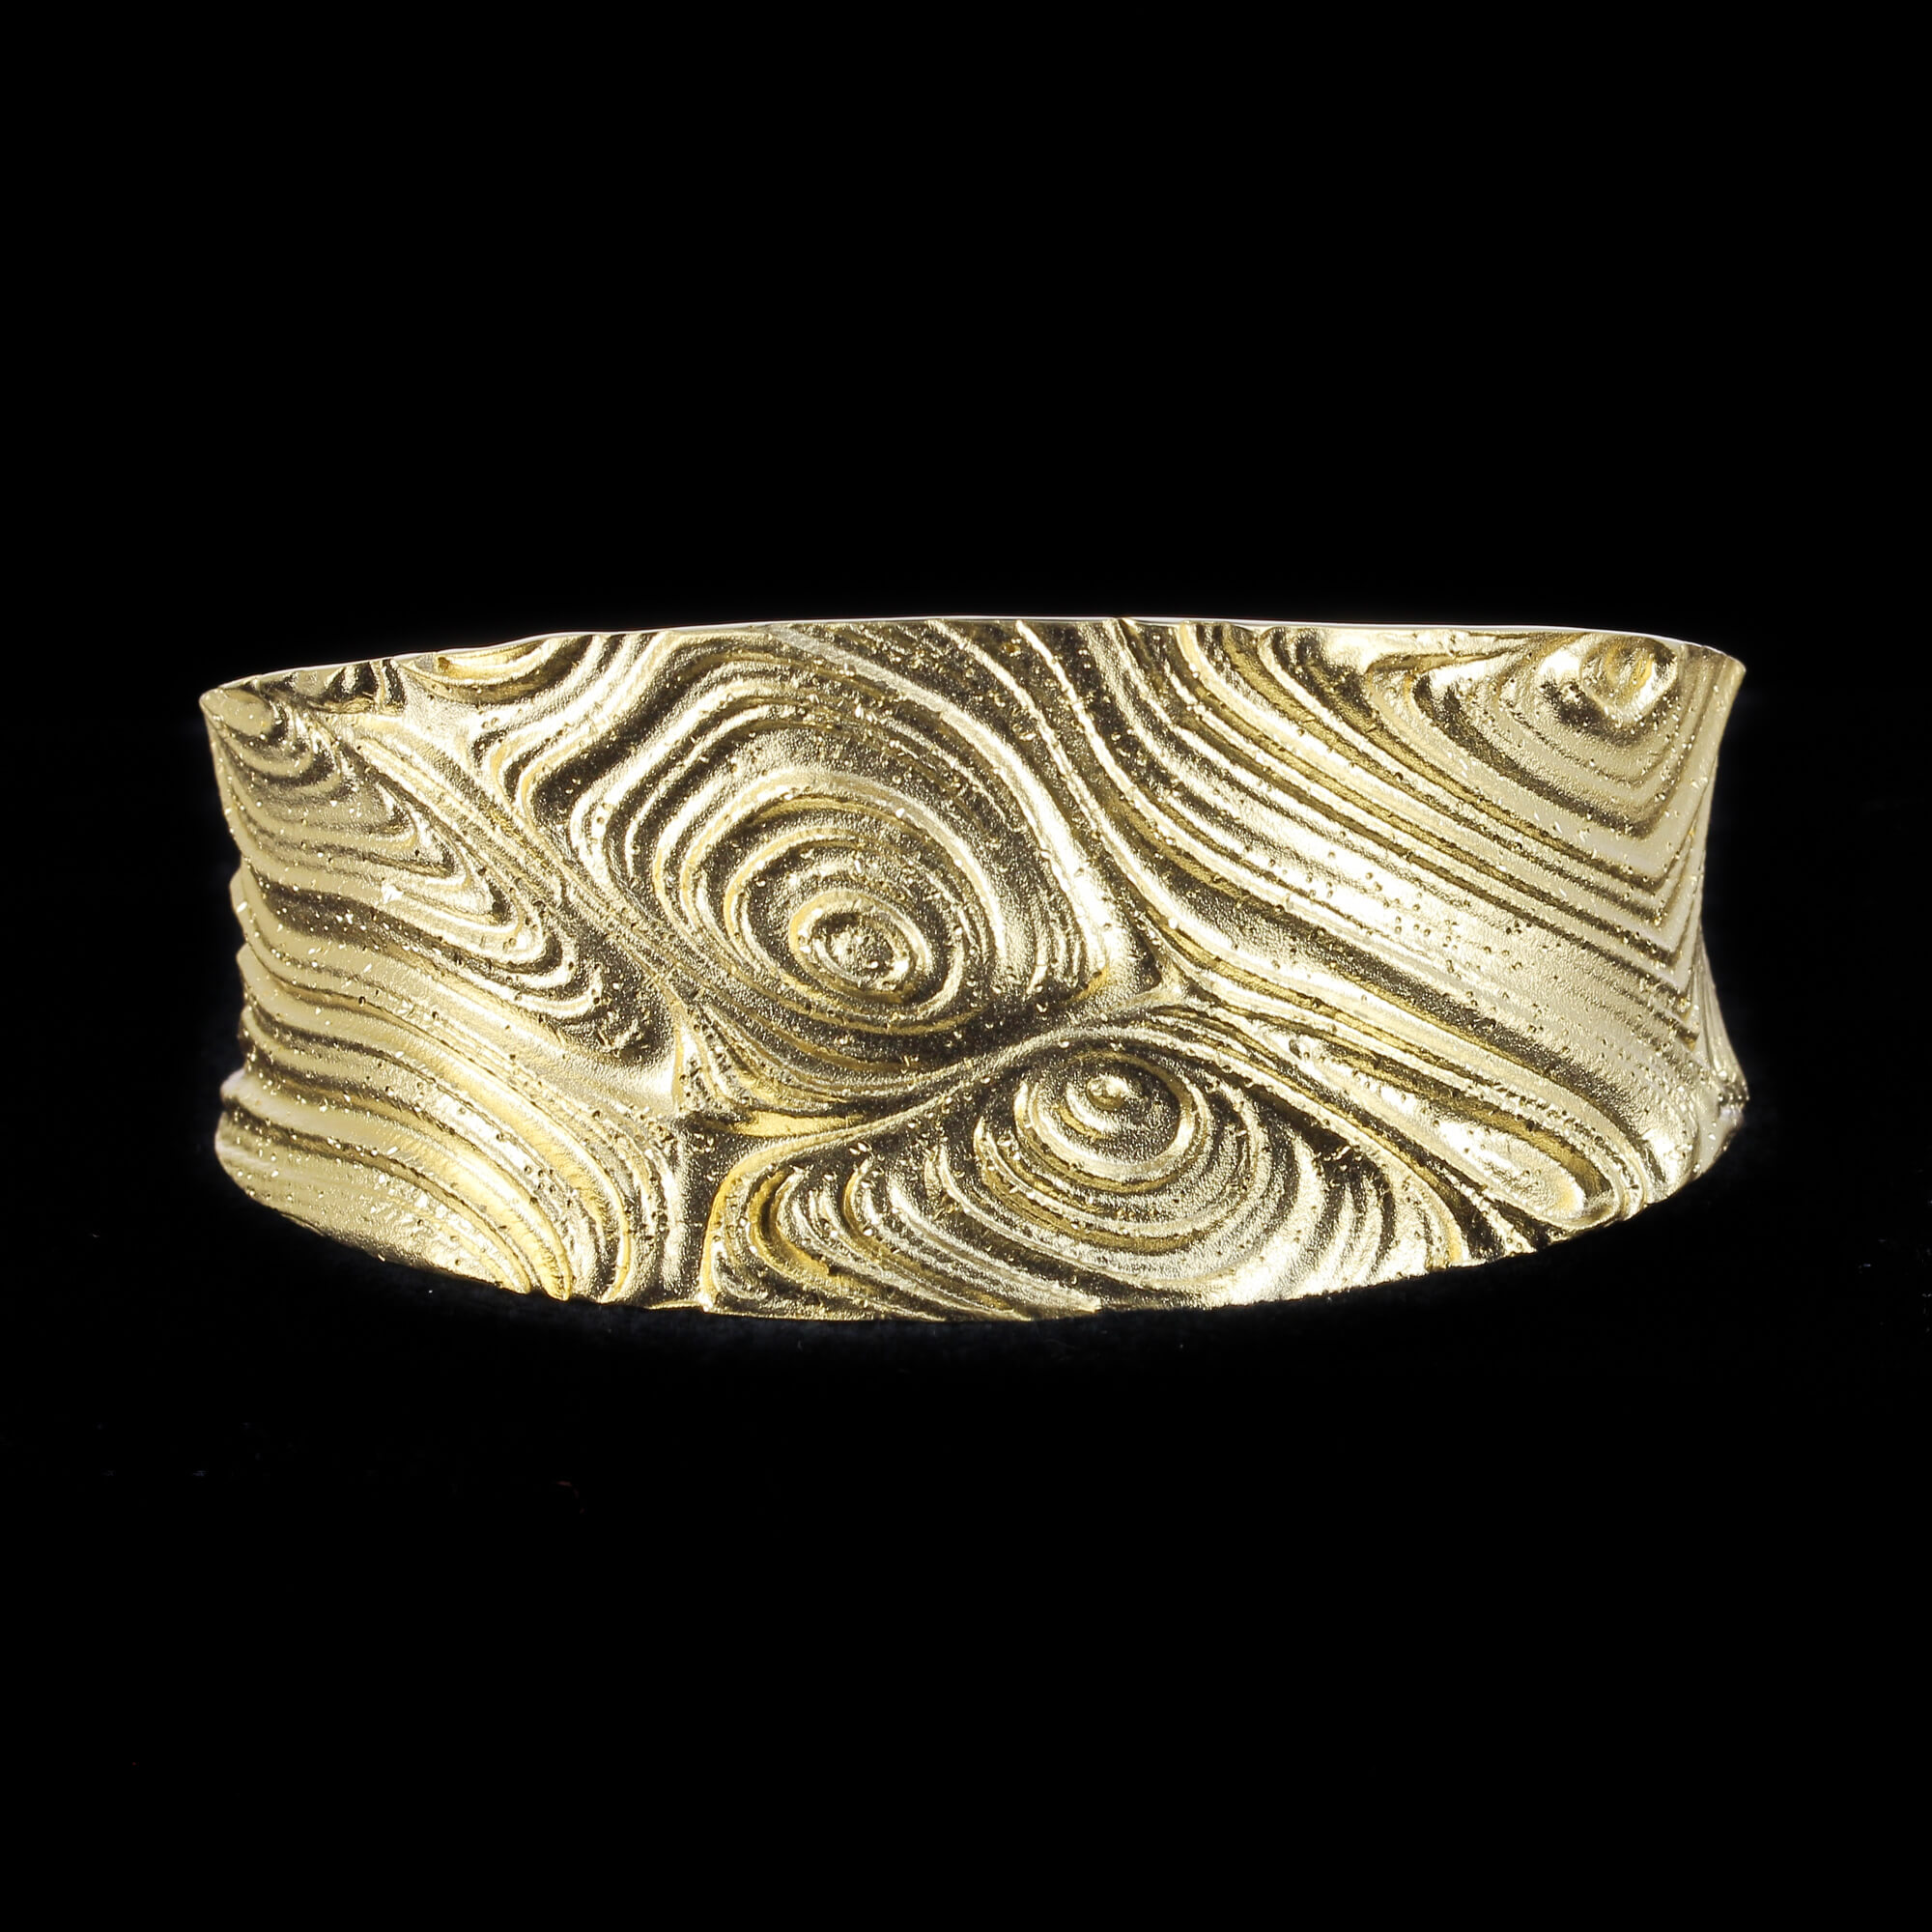 Gold plated and edited wide slave bracelet